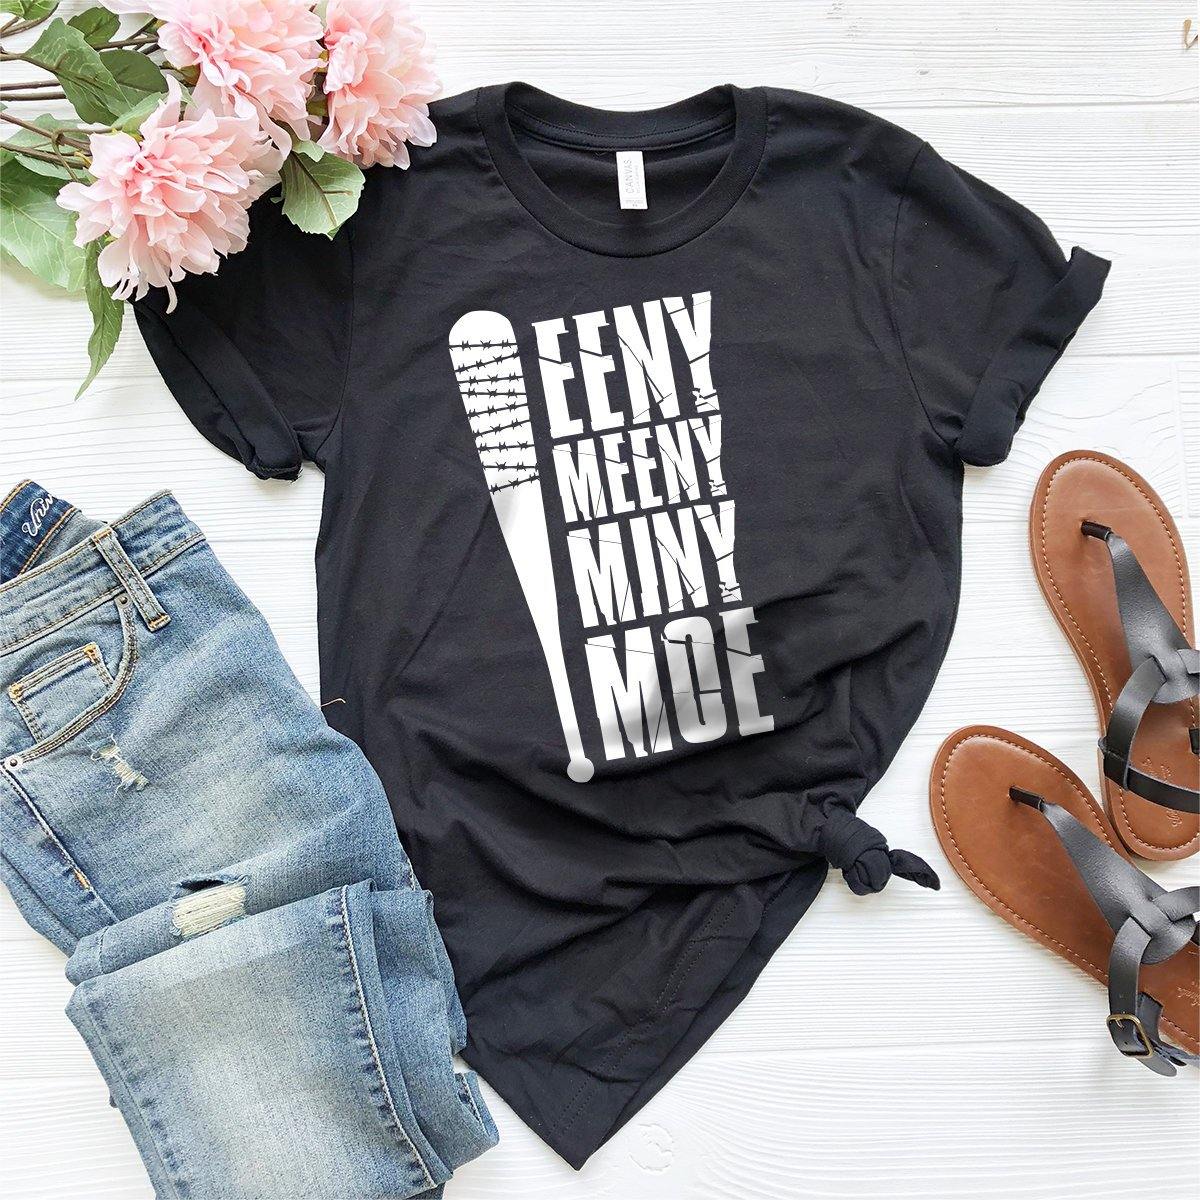 Eeny Meeny Miny Moe Shirt, The Walking Dead Negan's Bat Shirt, Baseball Bat Shirt, The Walking Dead Lover Shirt, Negan's Bat Lucille Tshirt - Fastdeliverytees.com